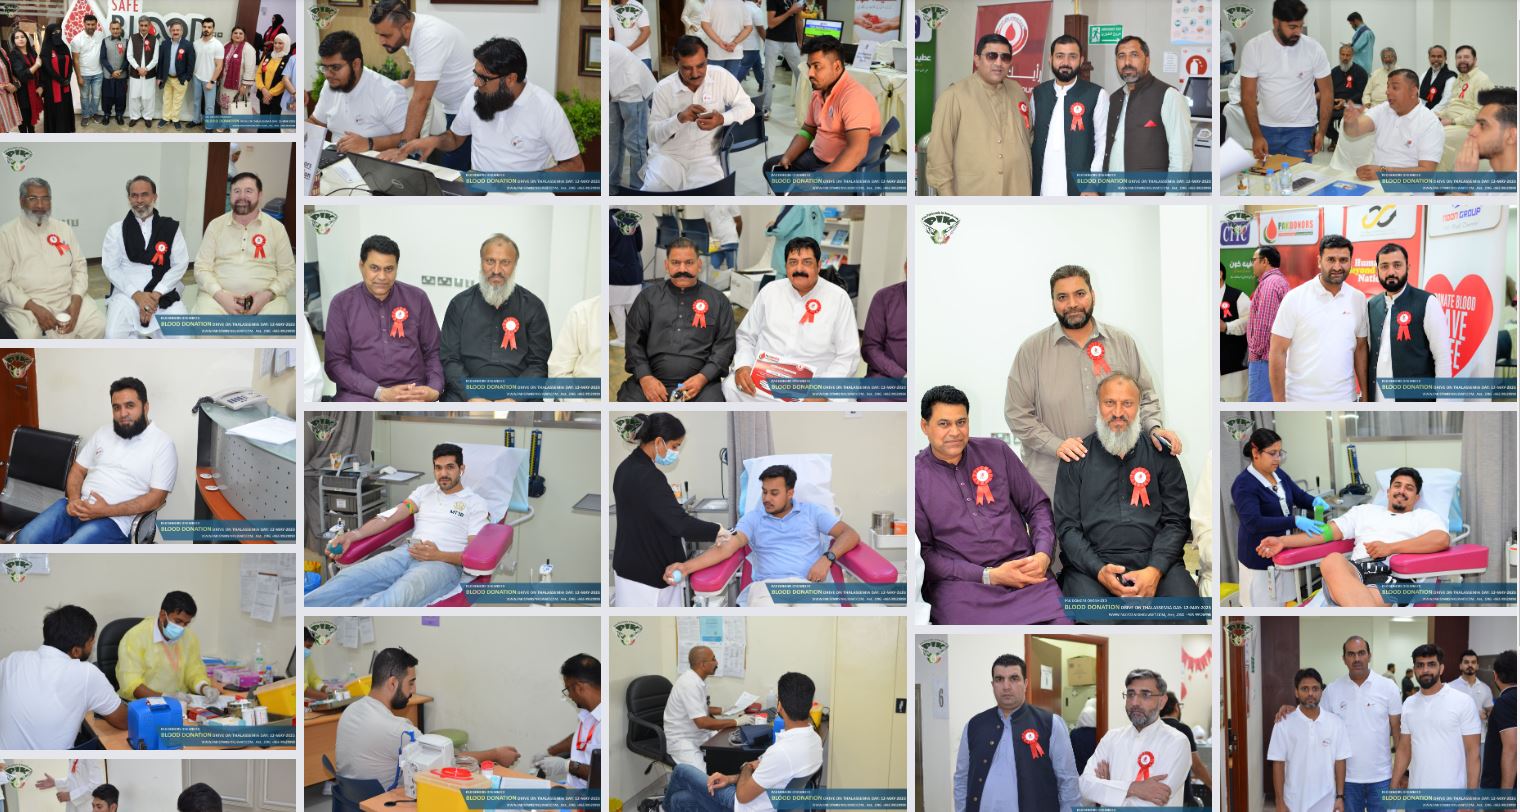 http://pakistanisinkuwait.com/images/5839-pak-donor-blood-donation-drive-on-i.jpg